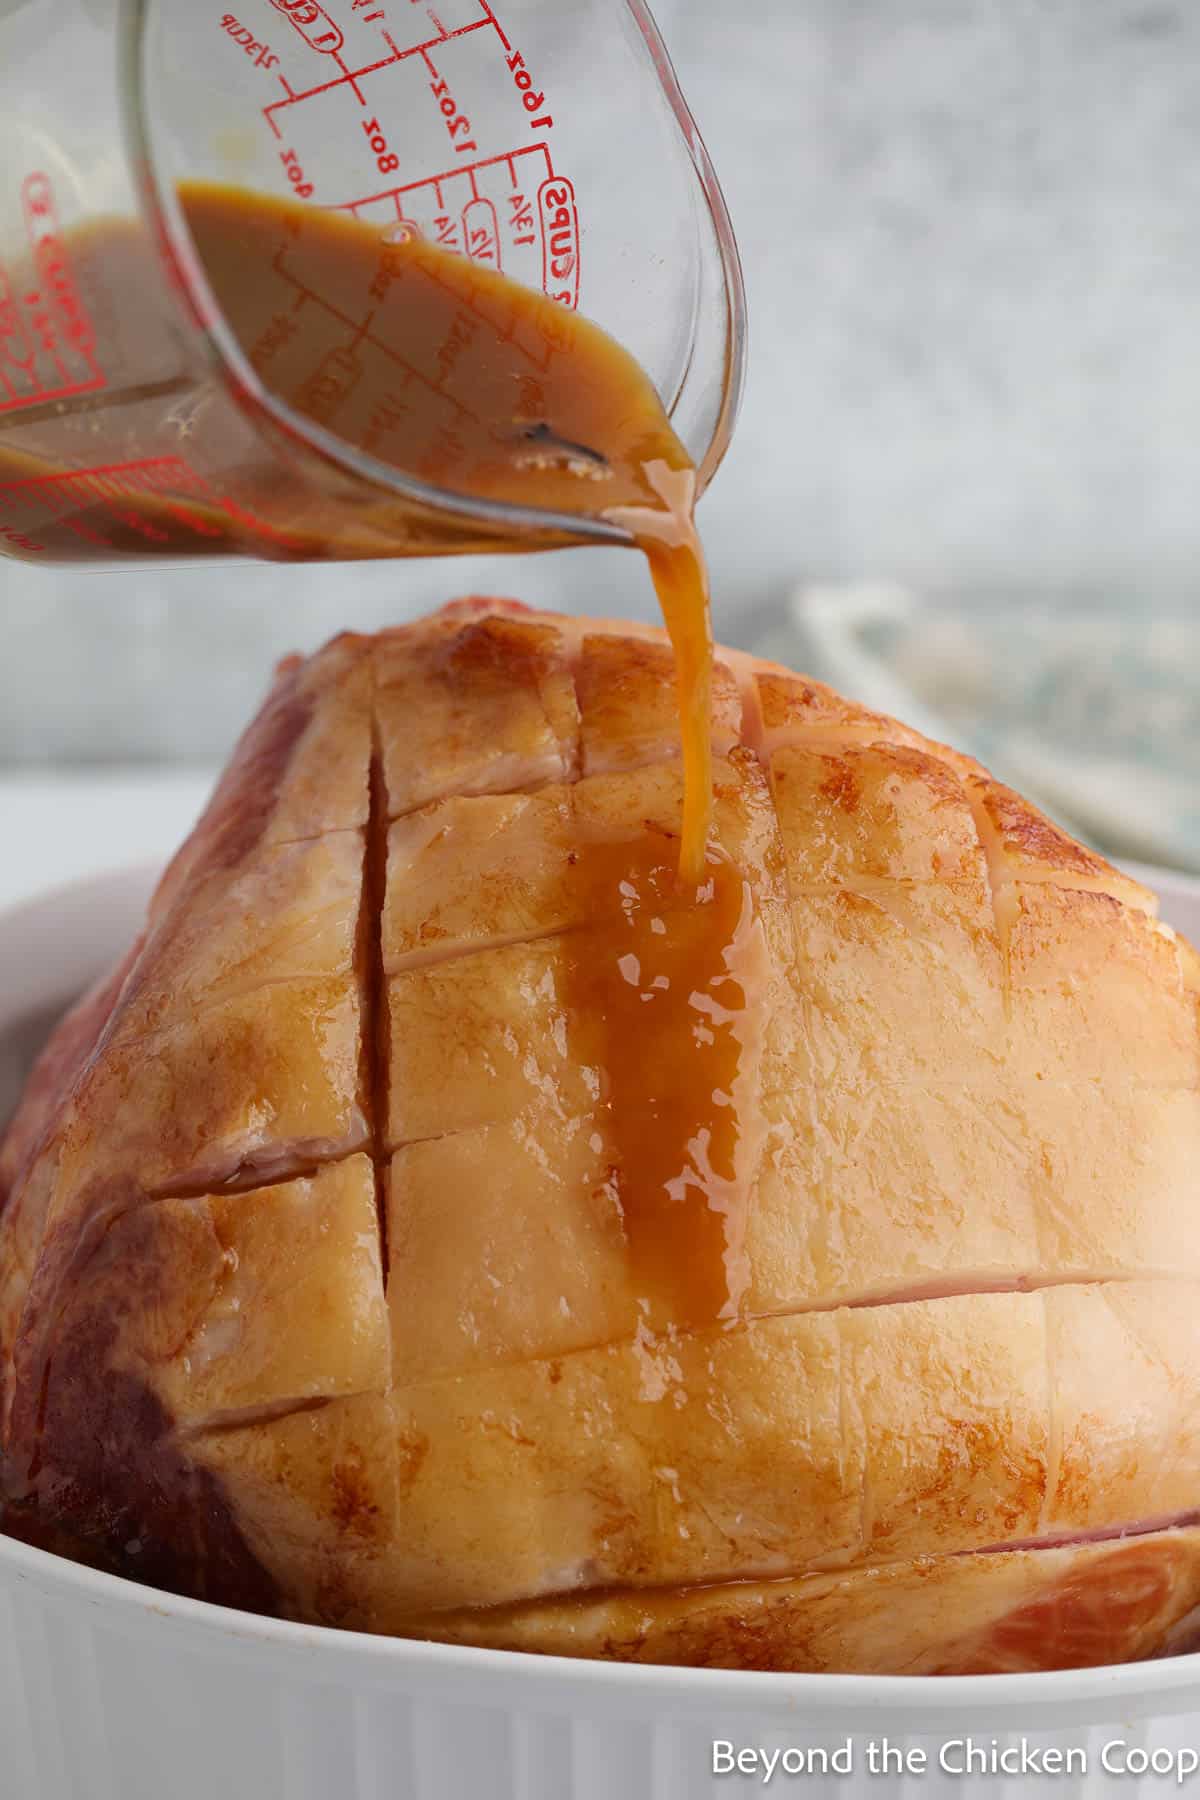 Pouring a glaze over a partially baked ham.